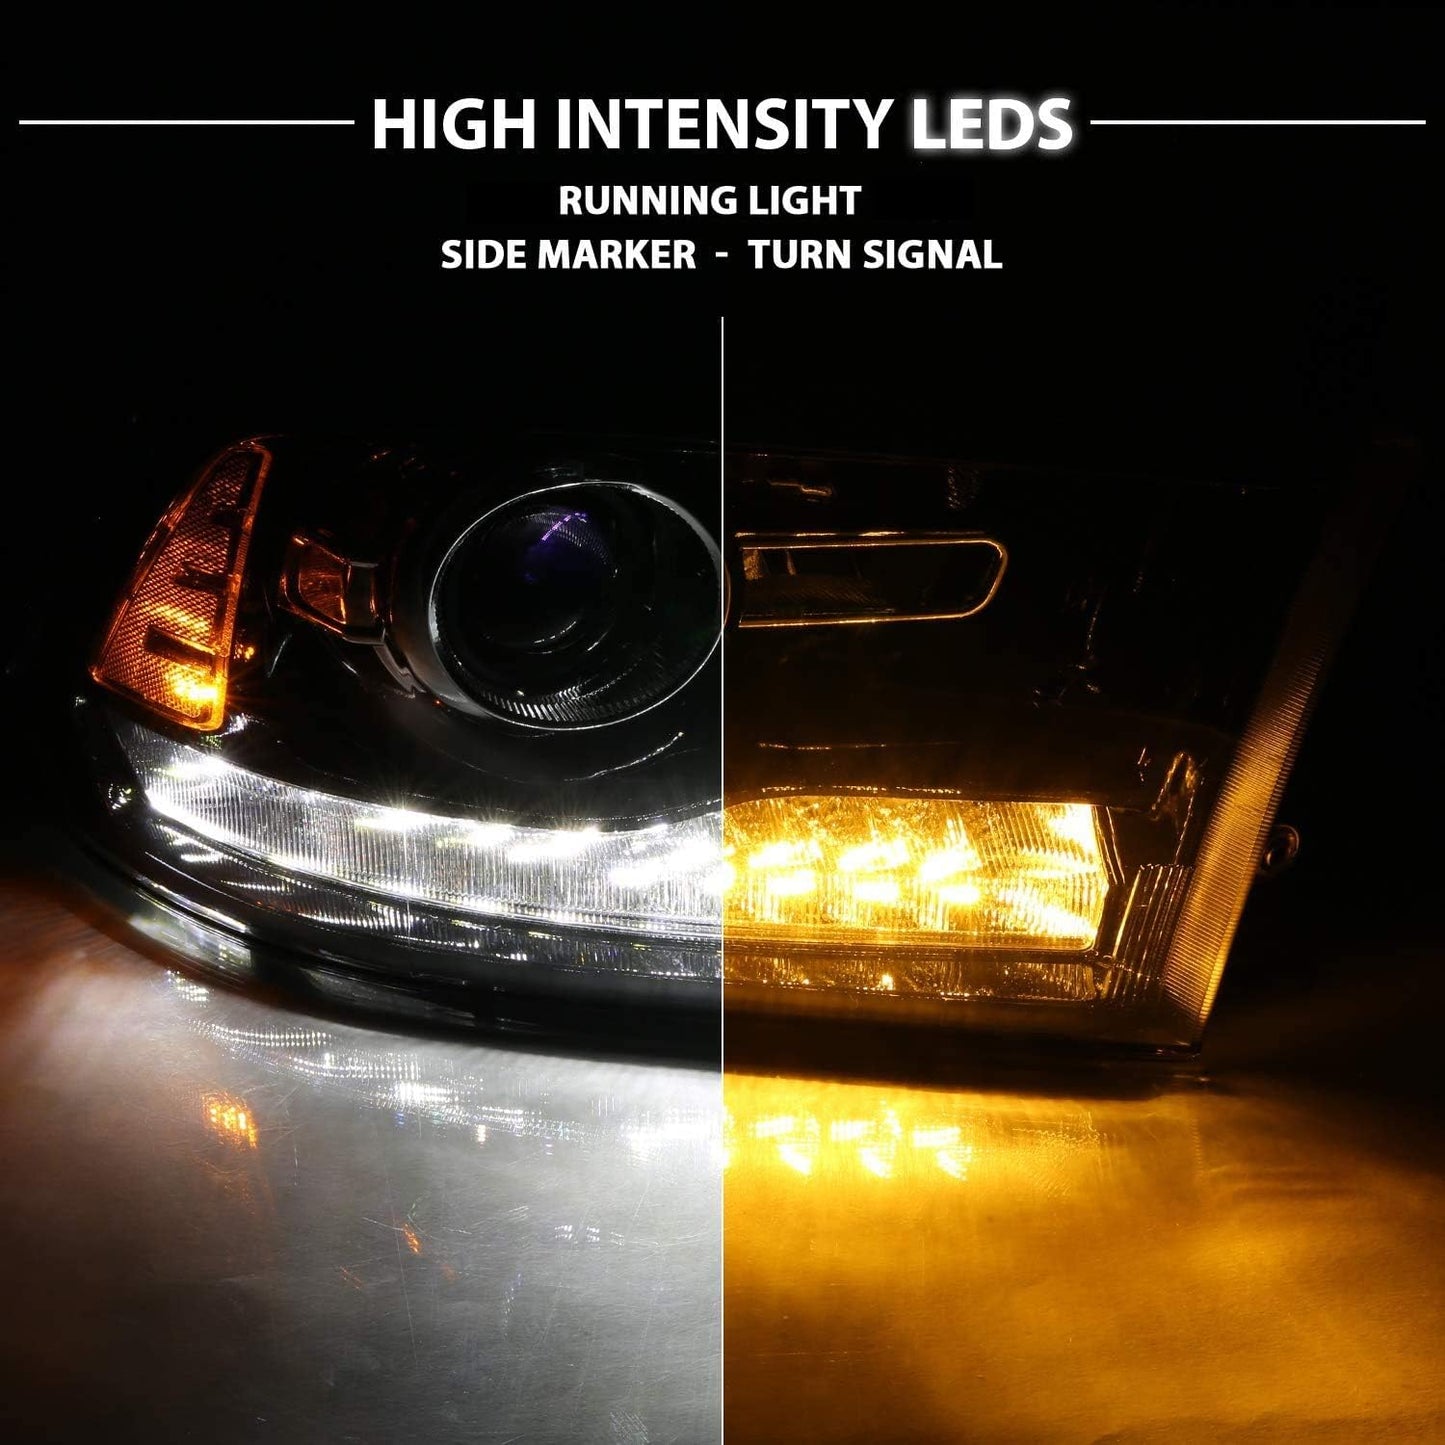 Halogen, led, Projector Headlights For 2009-2018 Dodge Ram 1500 2500 3500